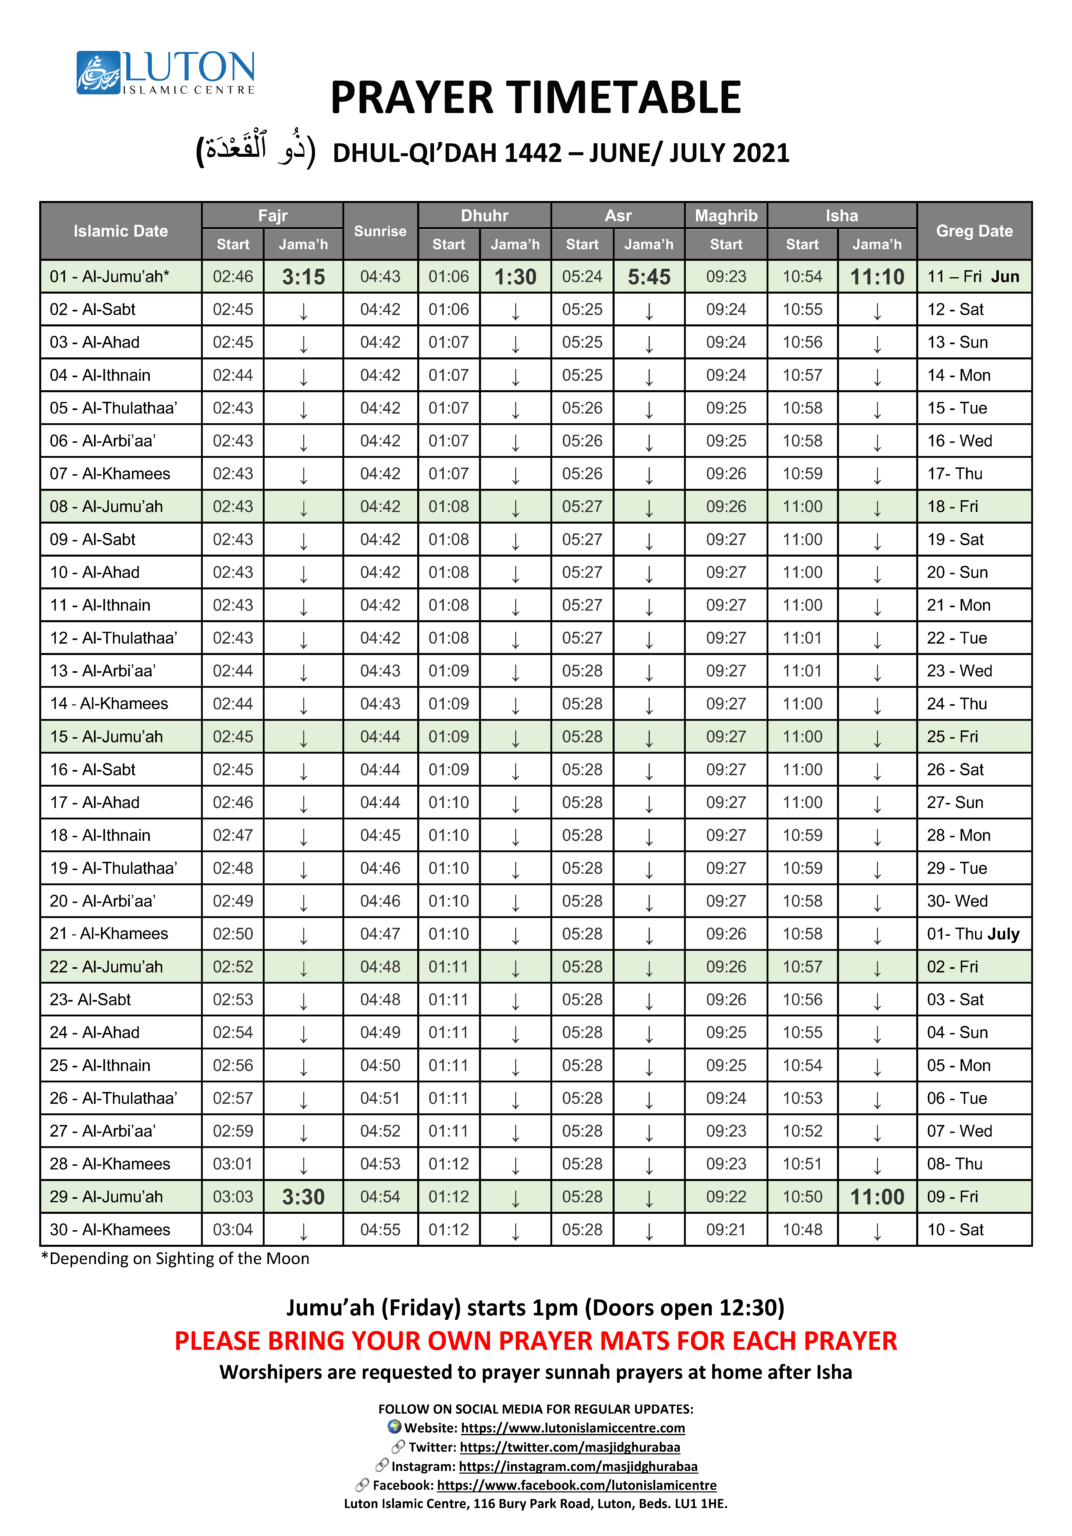 maidenhead mosque namaz timetable